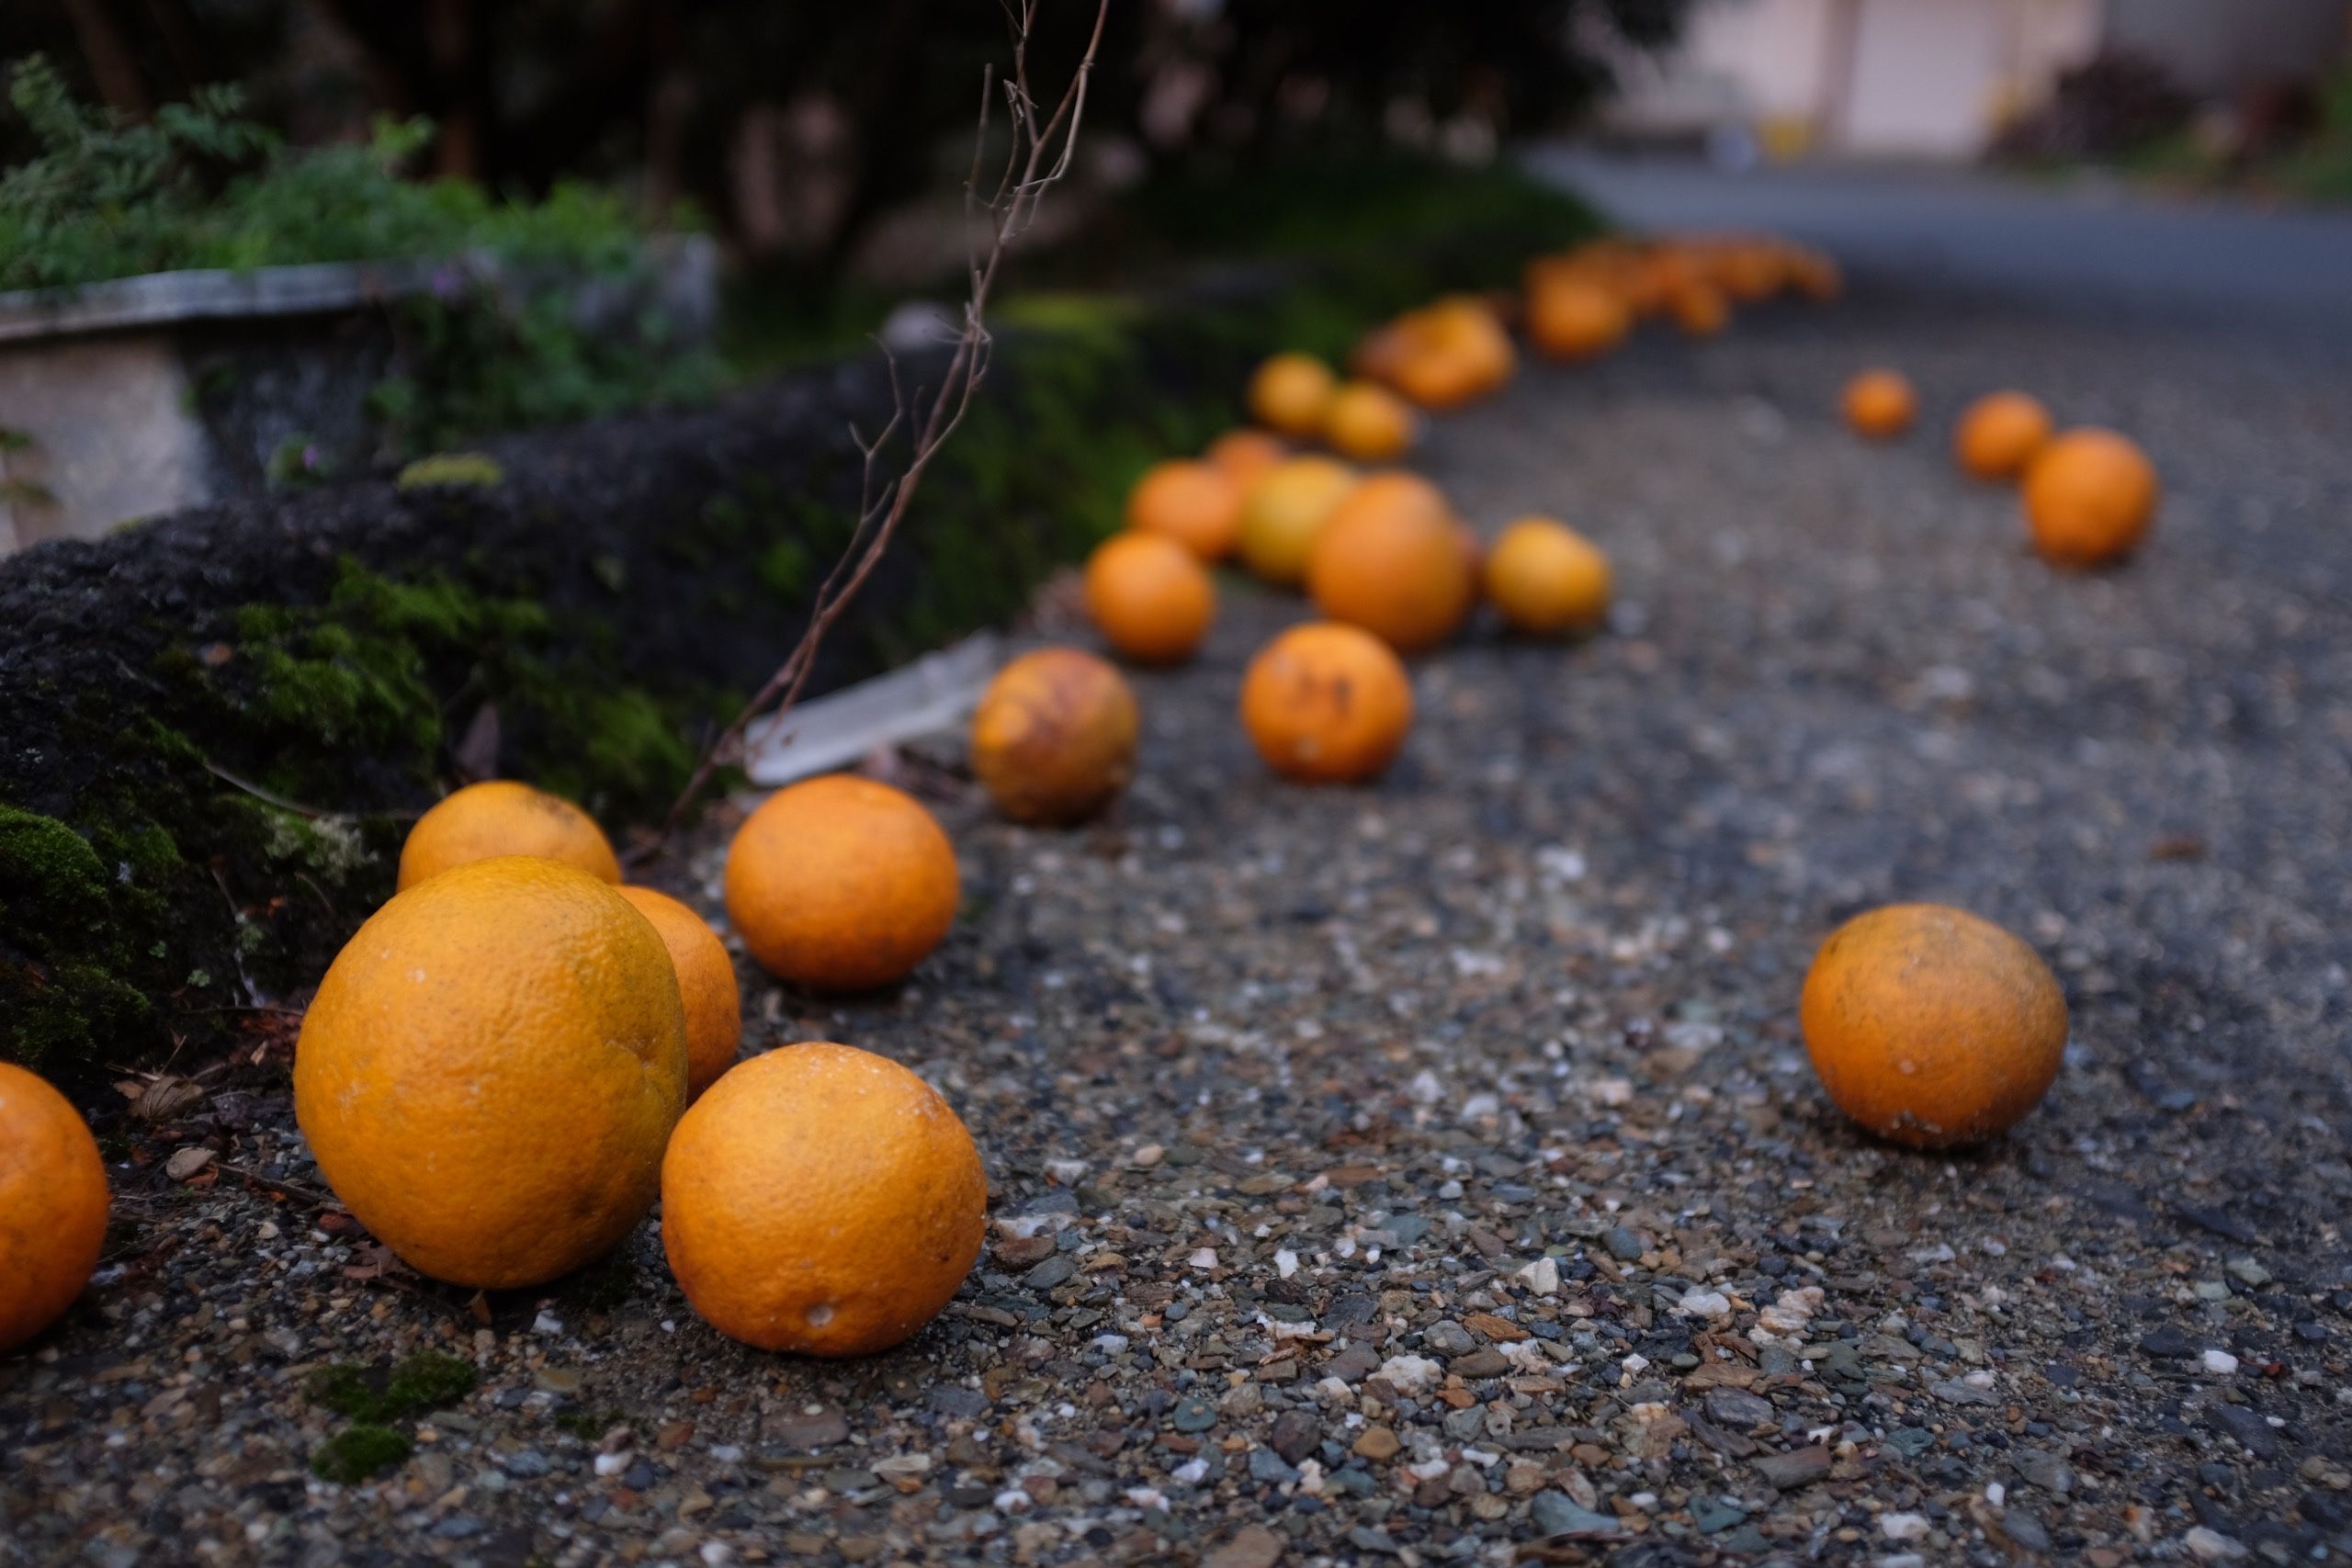 A line of fallen oranges at the edge of an asphalt road.